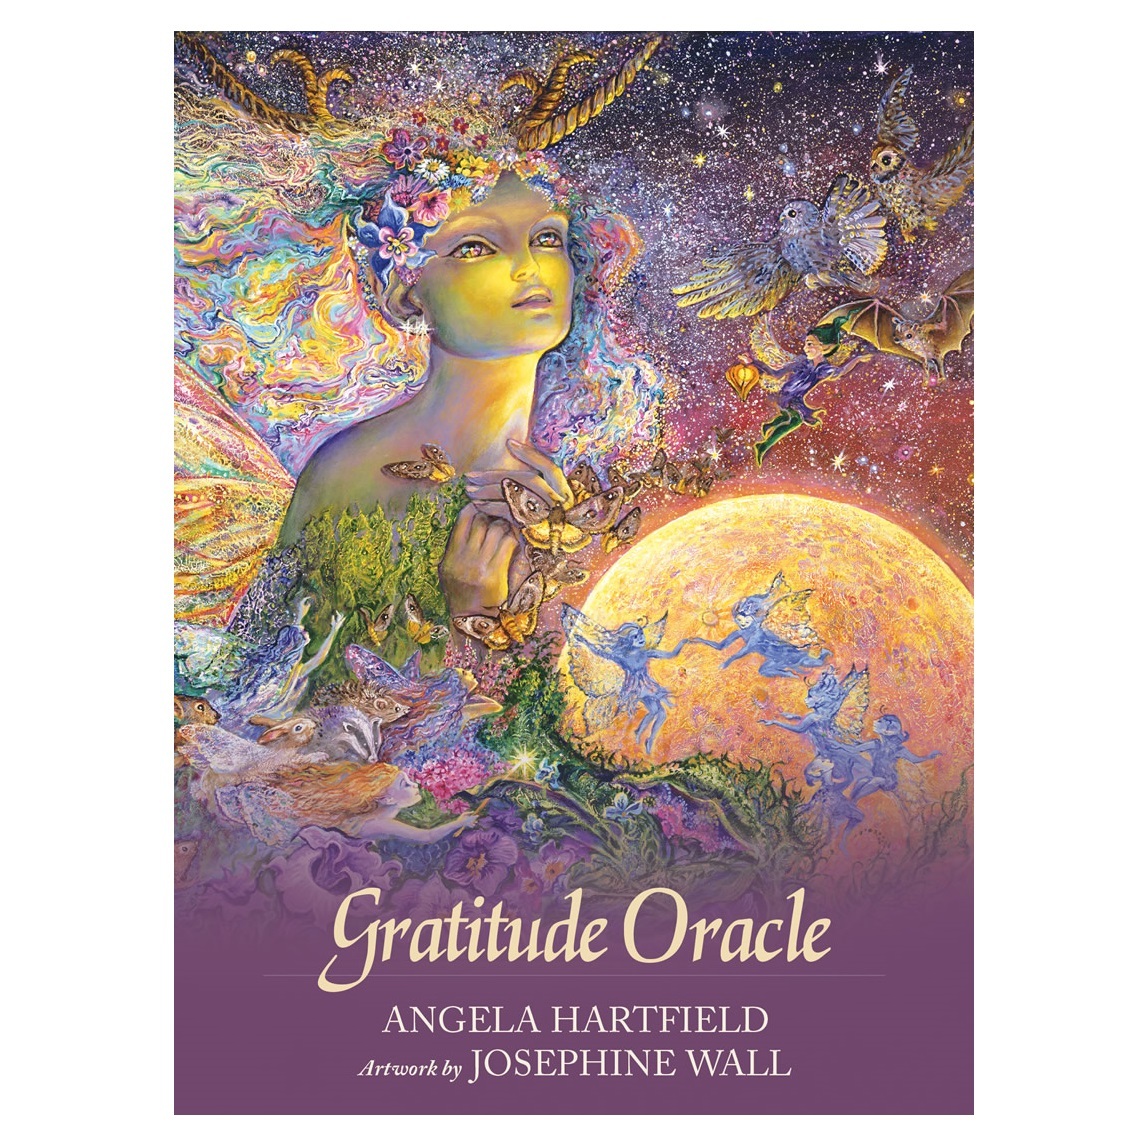 

Оракул Благодарности (Gratitude Oracle)